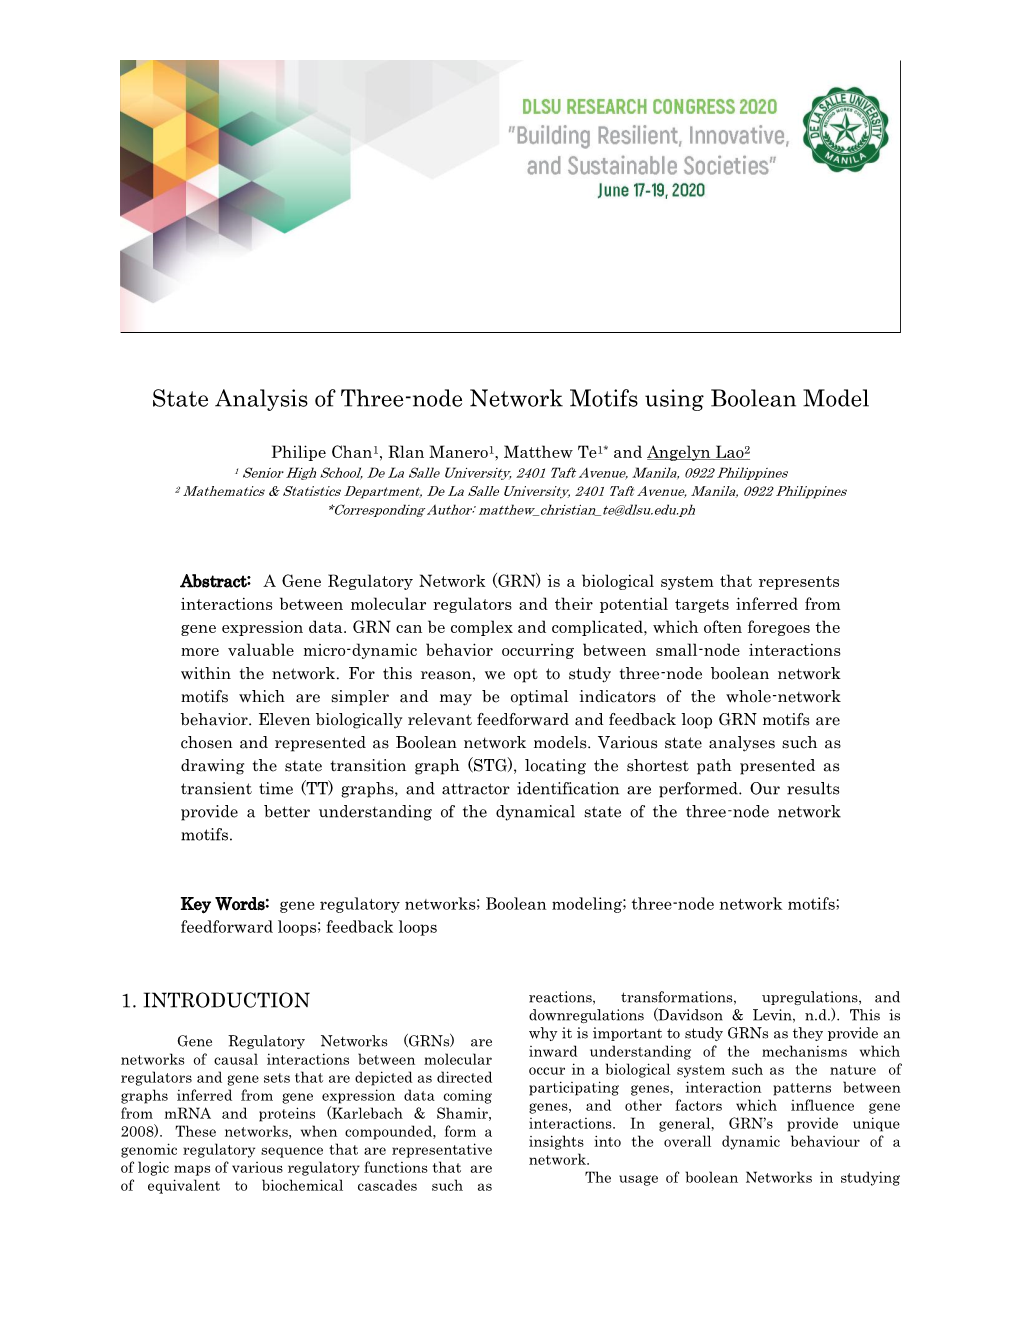 State Analysis of Three-Node Network Motifs Using Boolean Model